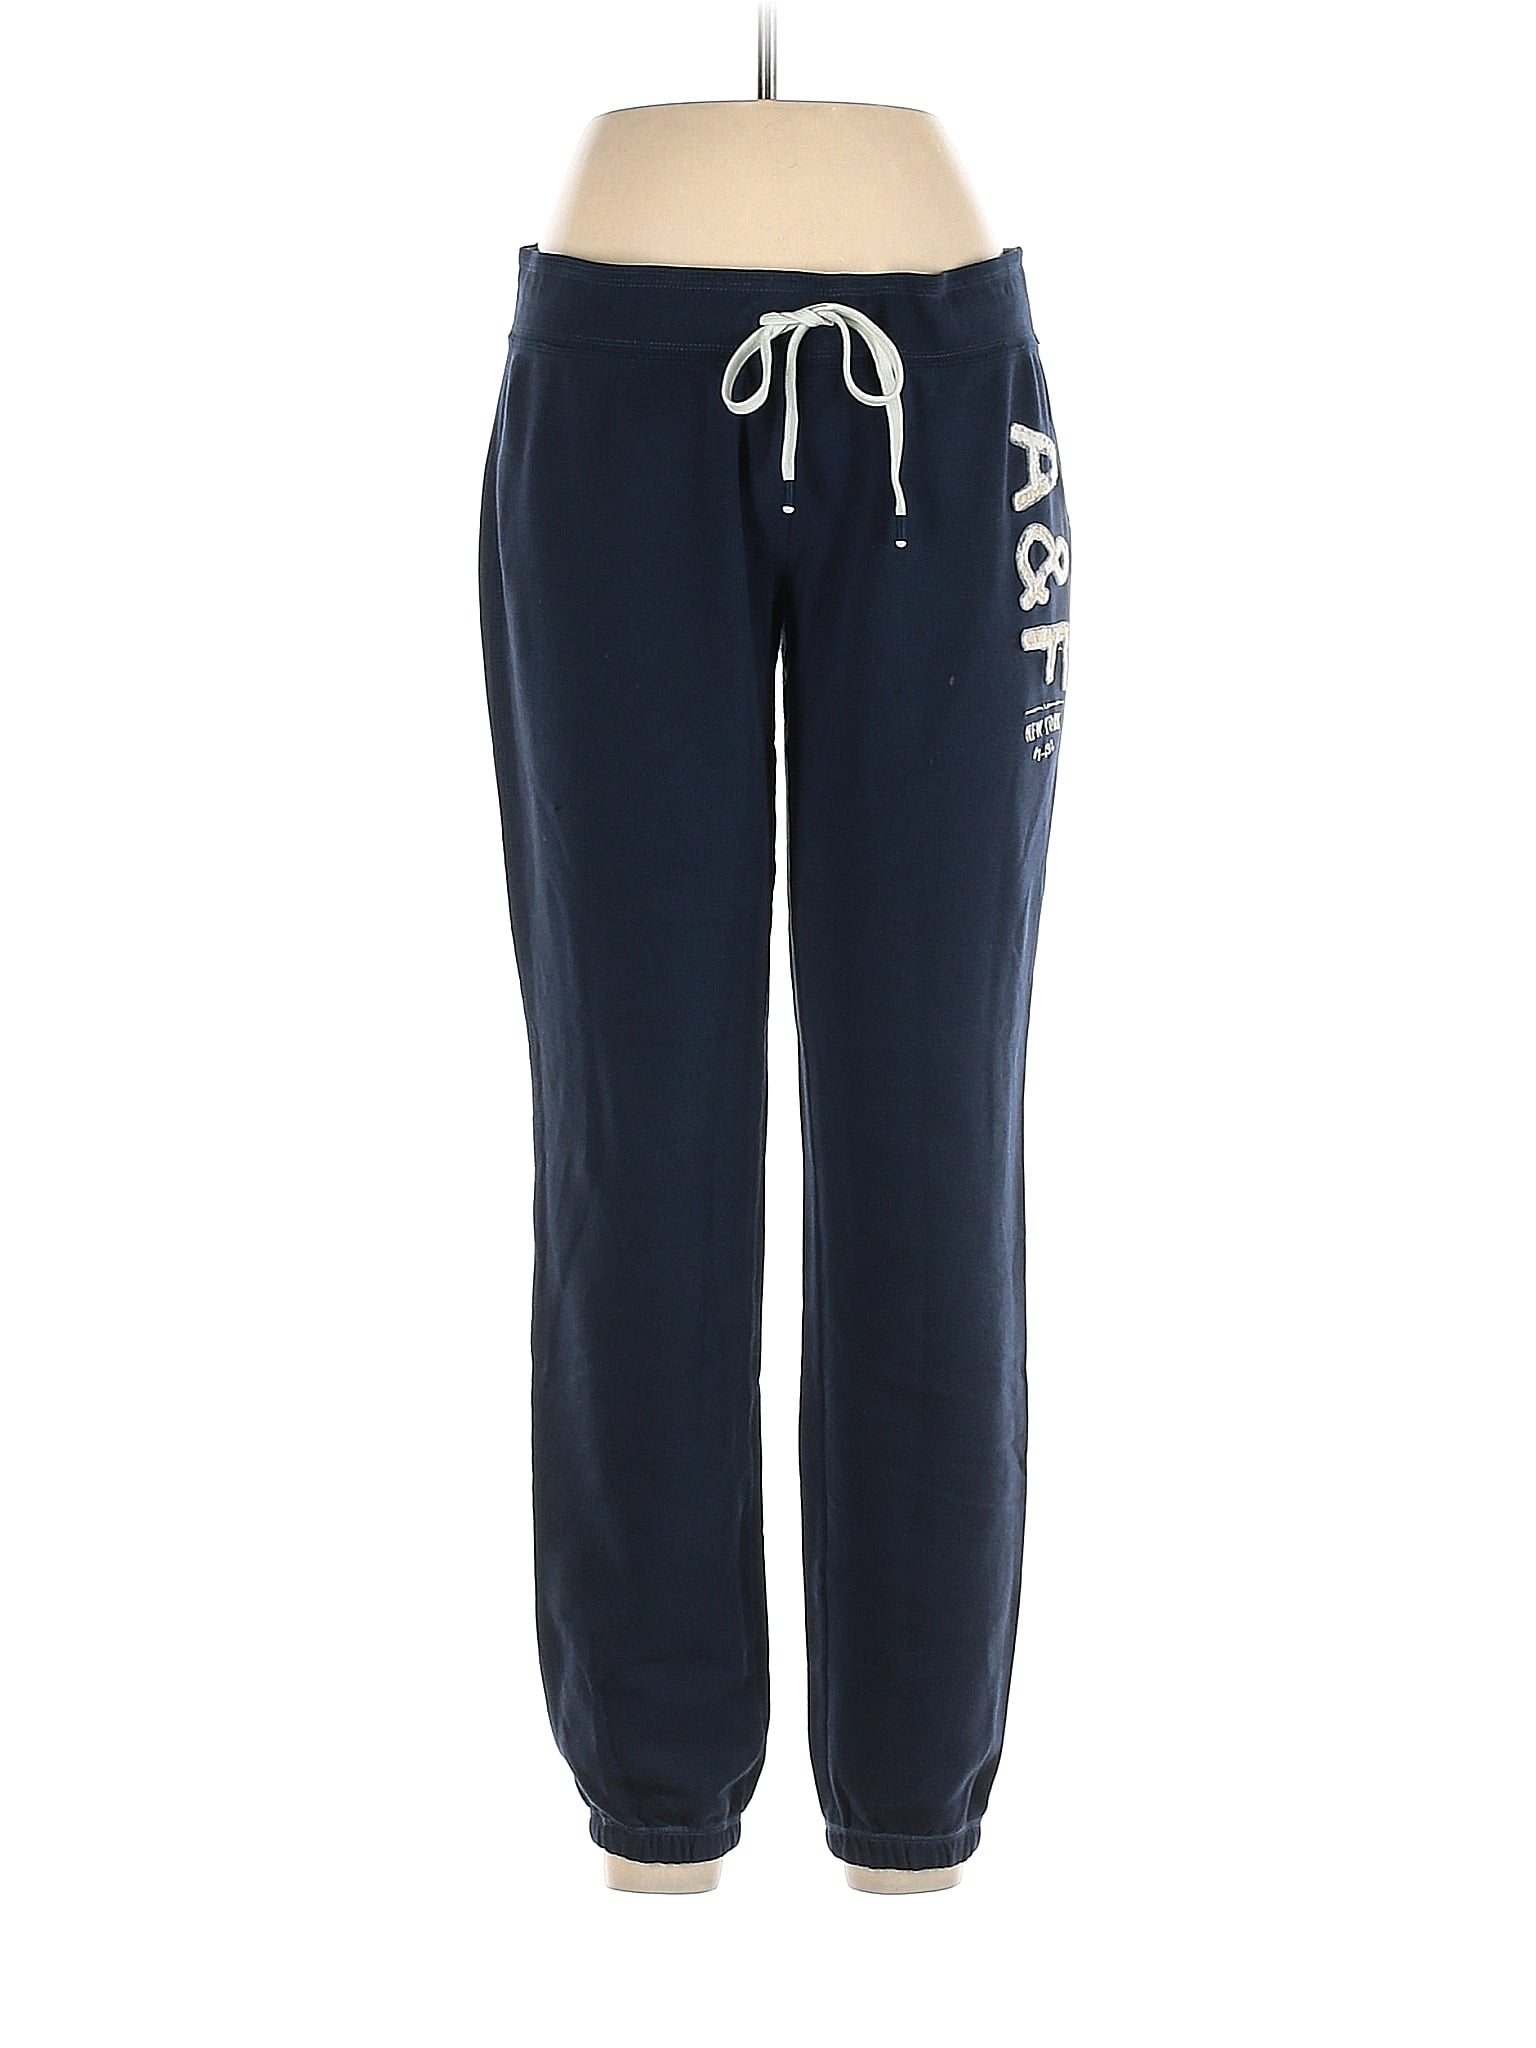 Abercrombie & Fitch Blue Sweatpants Size M - 64% off